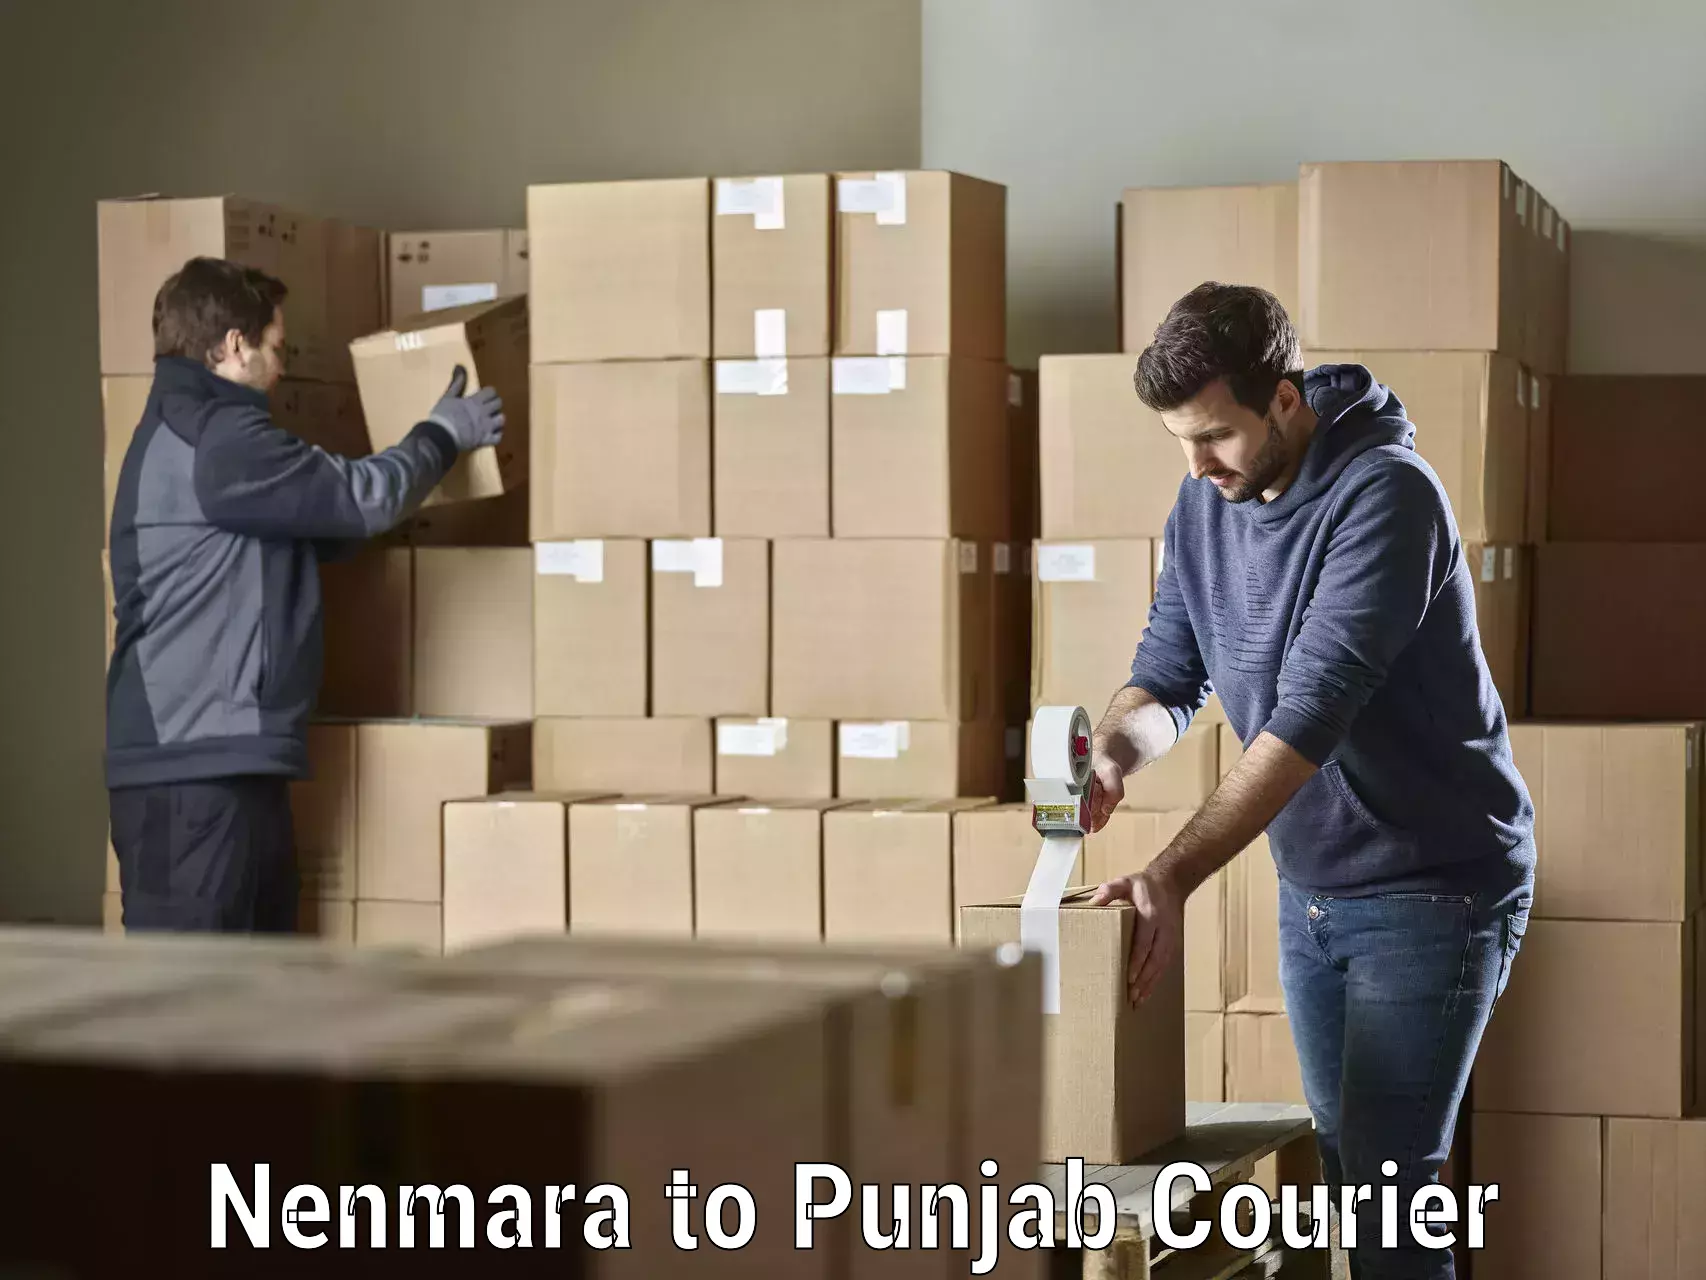 Courier membership Nenmara to Punjab